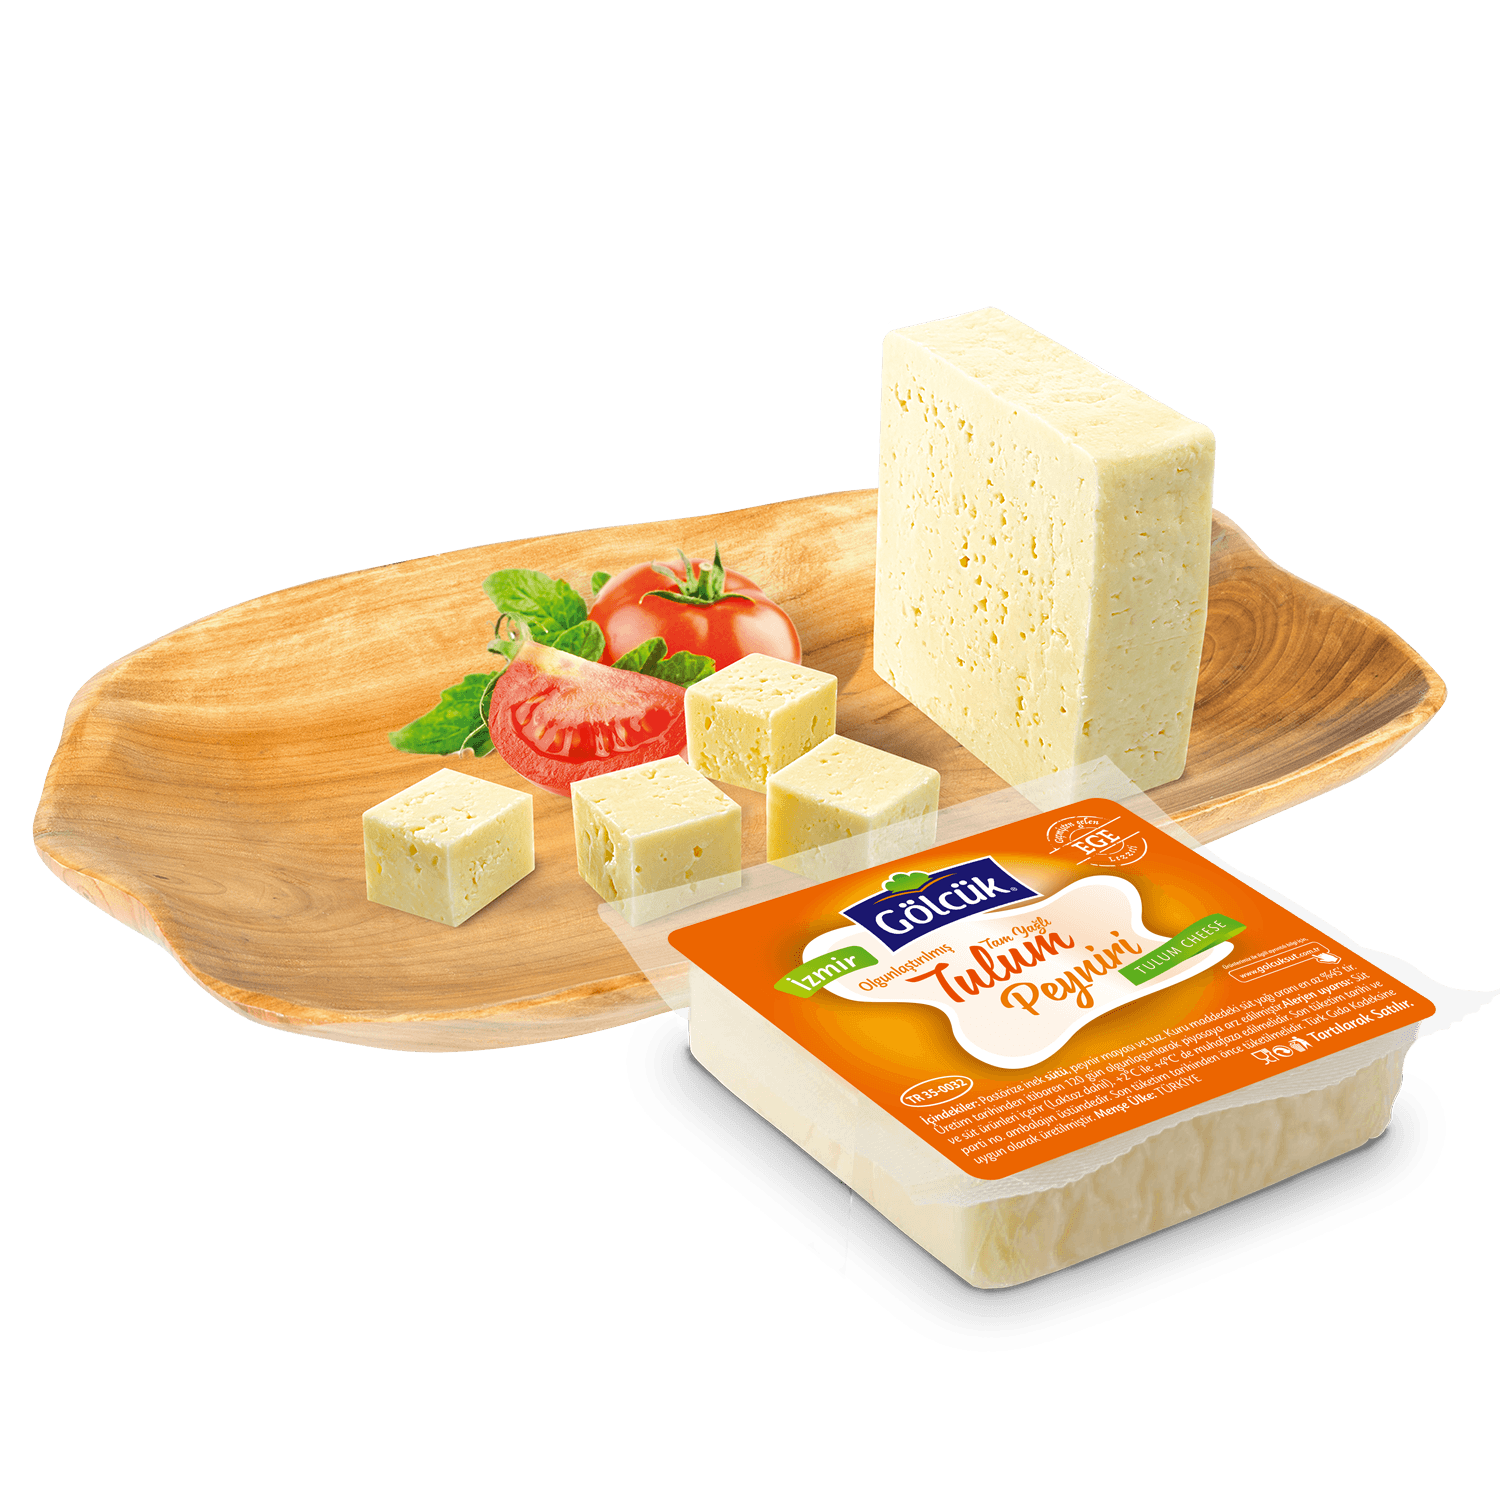 Gölcük Süt Ürünleri- Natural Cheese Manufacturer